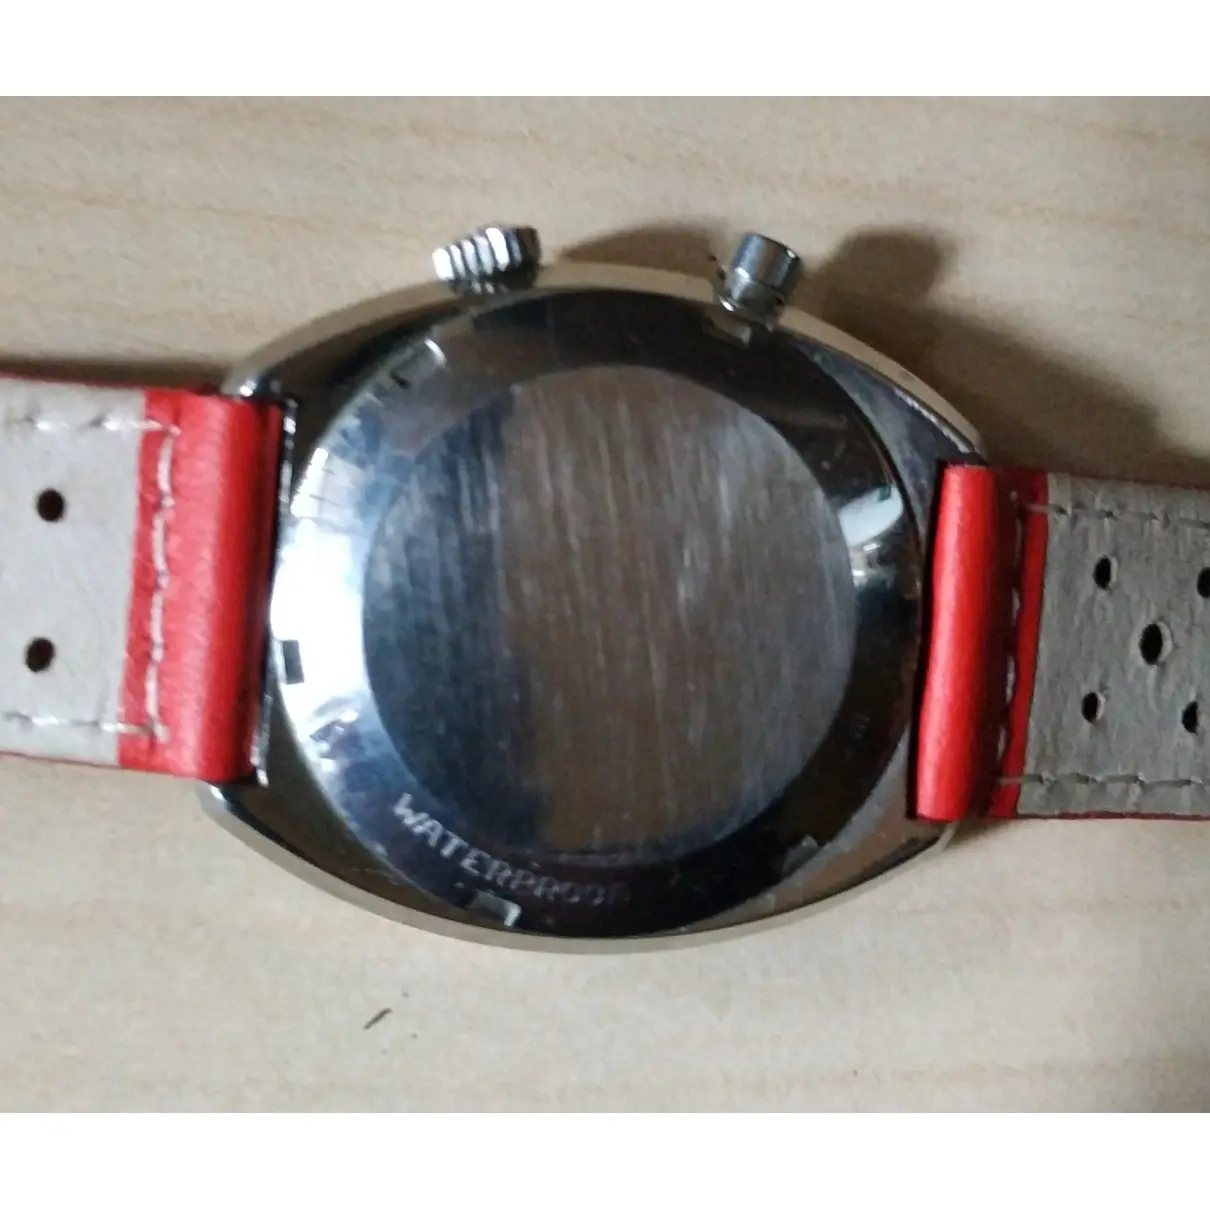 Buy Omega Watch online - Vintage